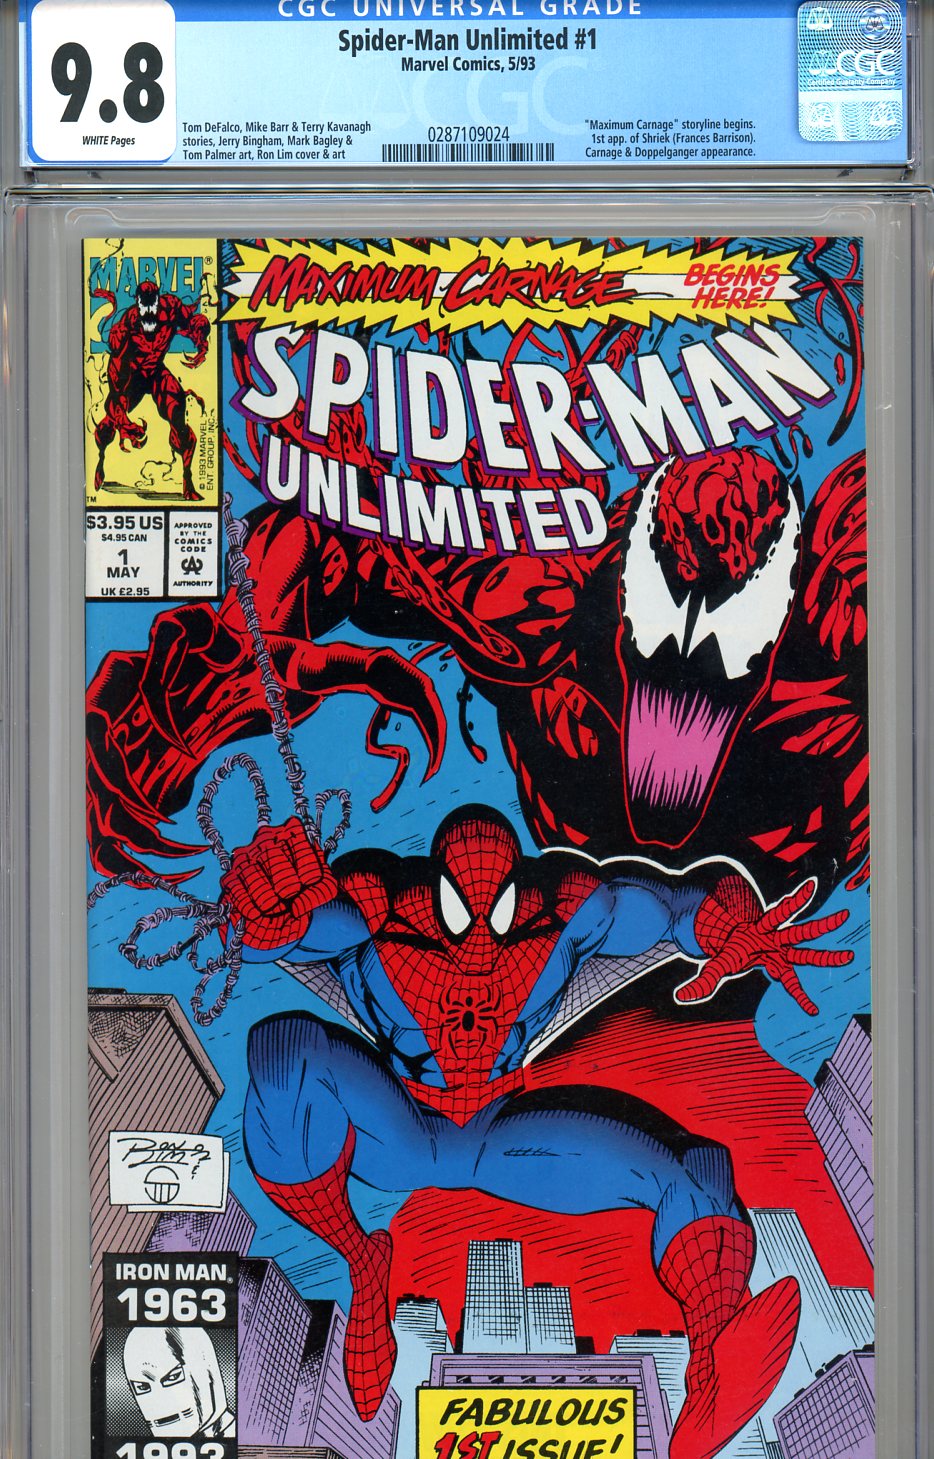 Cedar Chest Comics - Spider-Man Unlimited #1 CGC graded  - first Shriek  SOLD!